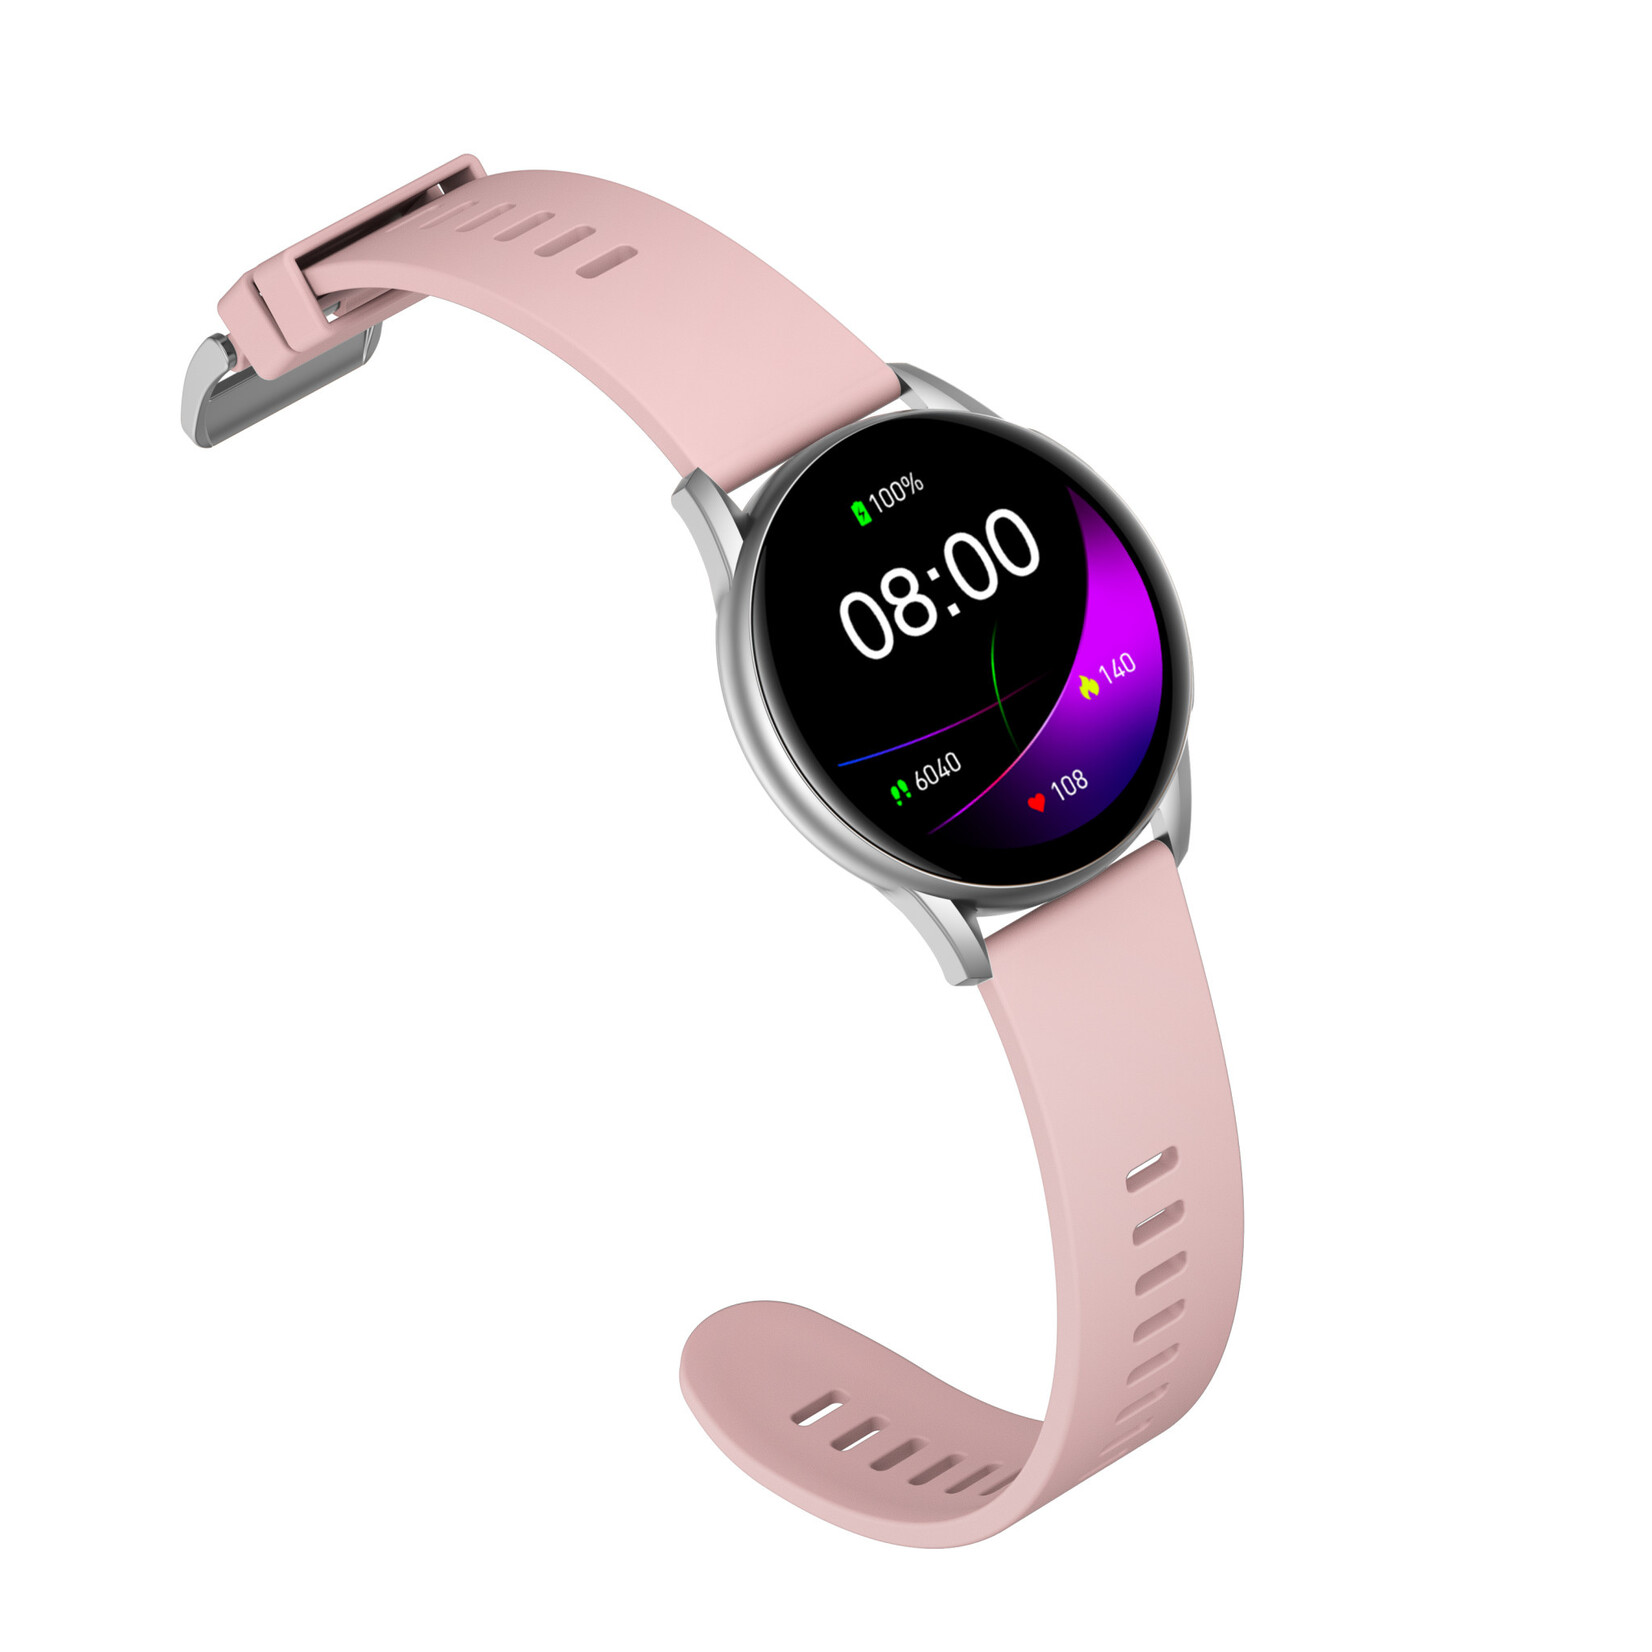 STRAND STRAND Smart Watch w/ Pink Strap